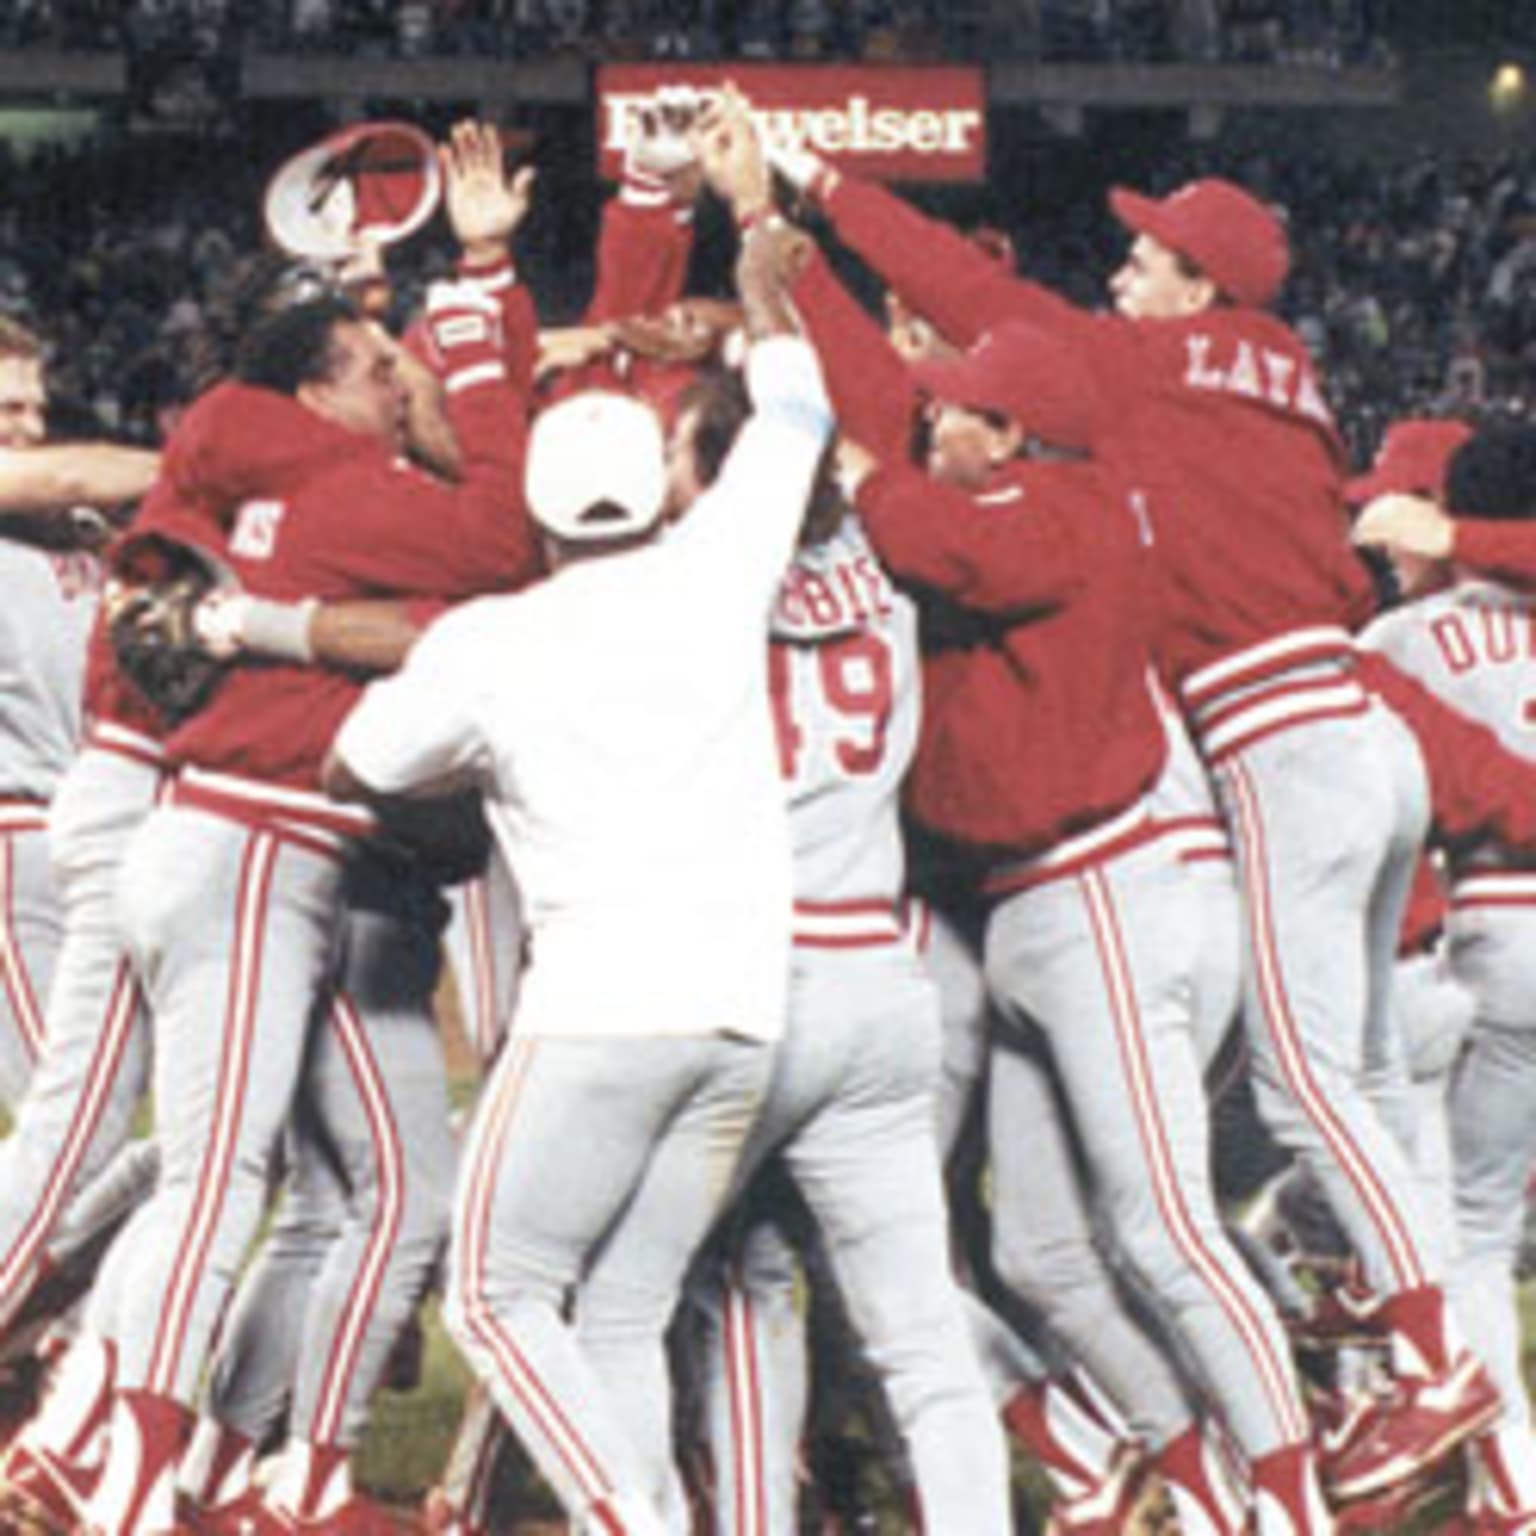 1990 Cincinnati Reds postseason highlights HD 